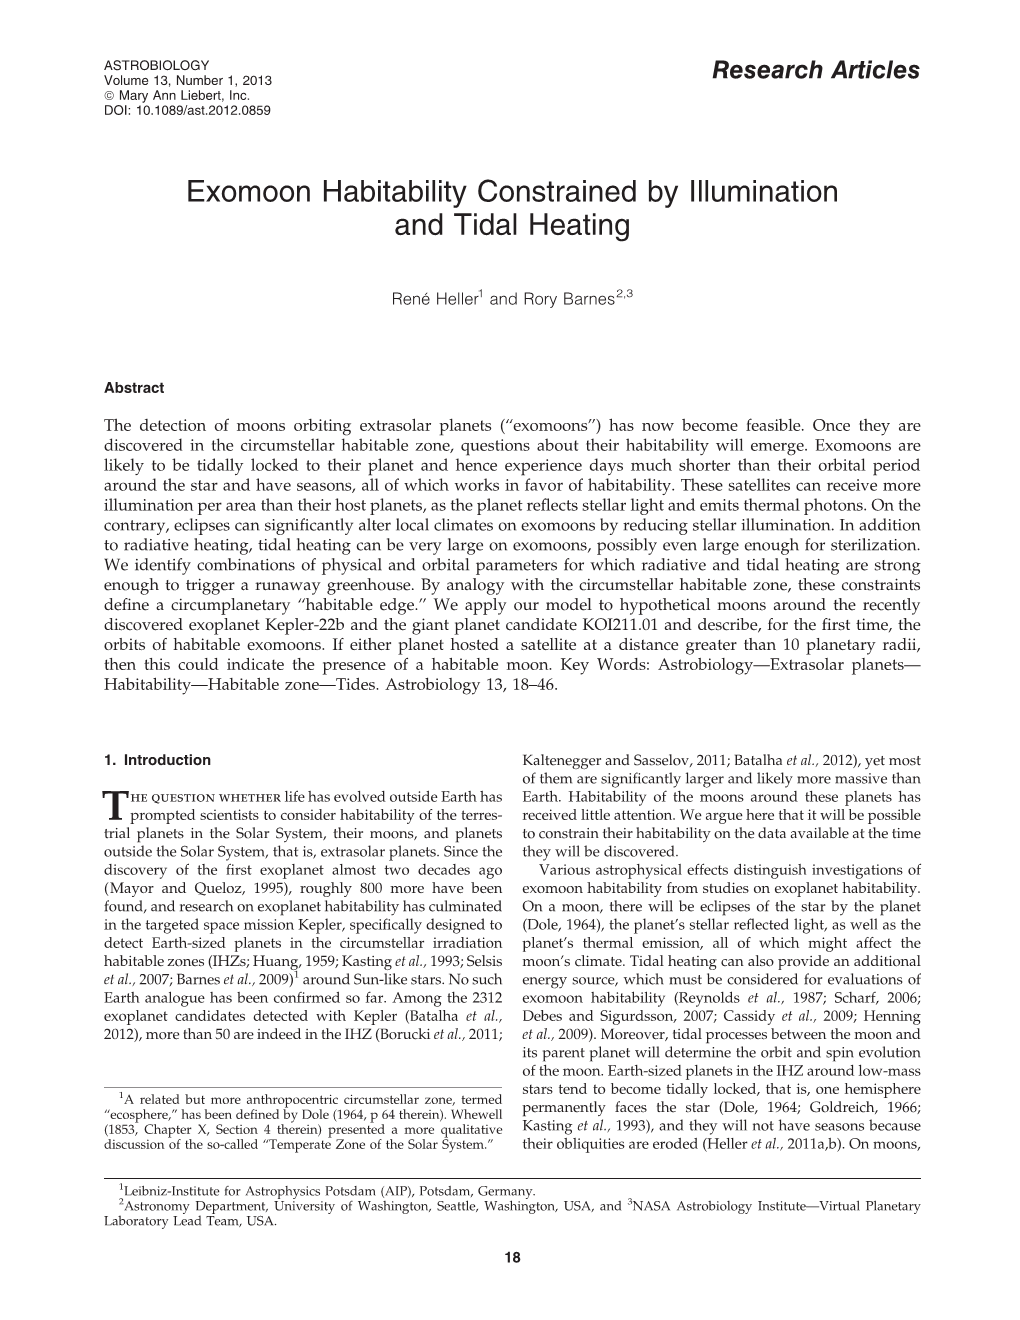 Exomoon Habitability Constrained by Illumination and Tidal Heating